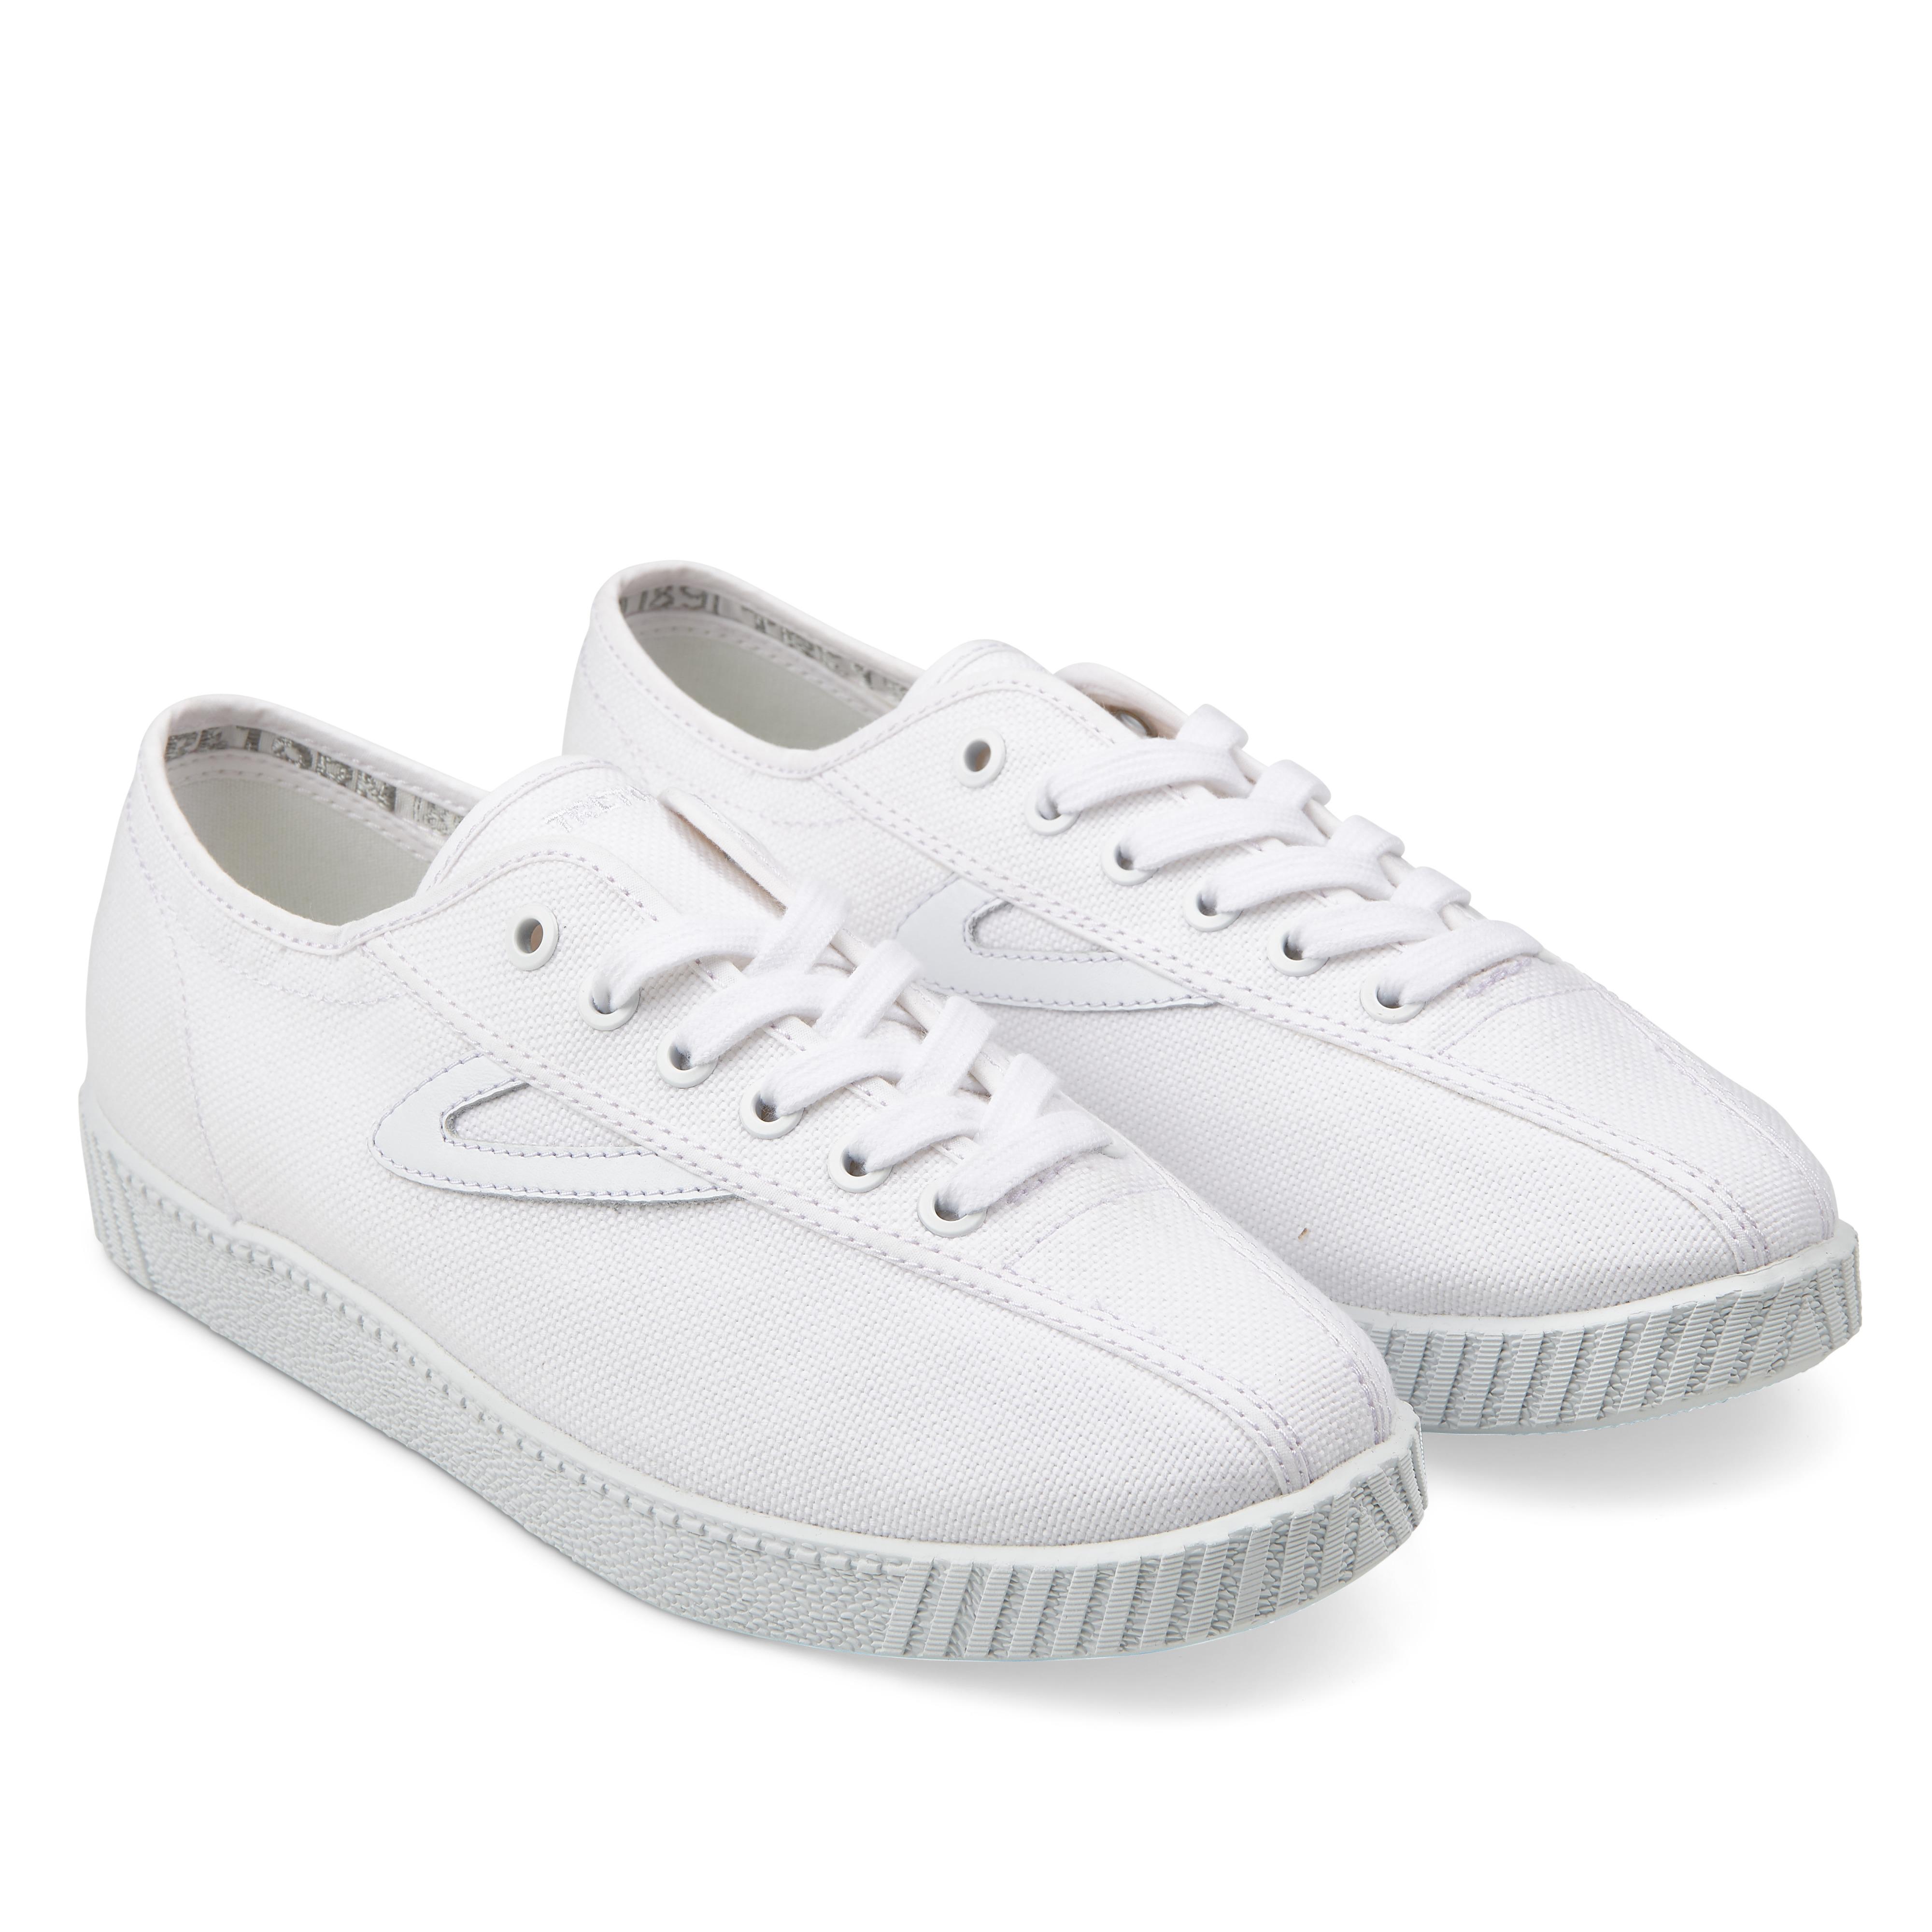 Tretorn Nylite Sneakers In White / White in White - Lyst